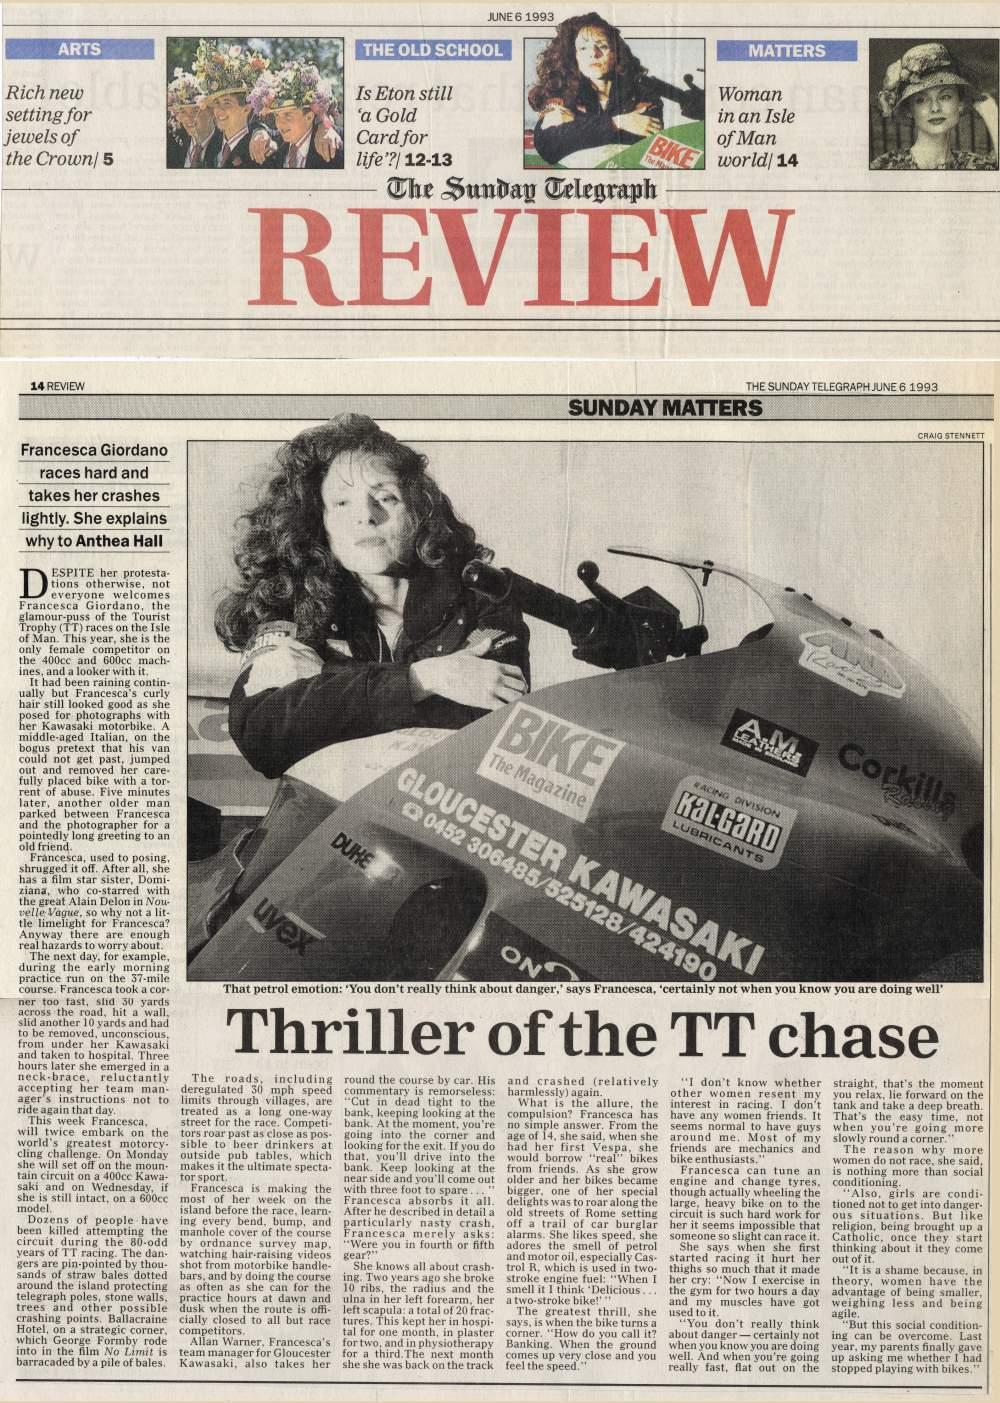 Thrill of the TT Chase - Sunday Telegraph - 6 June 1993